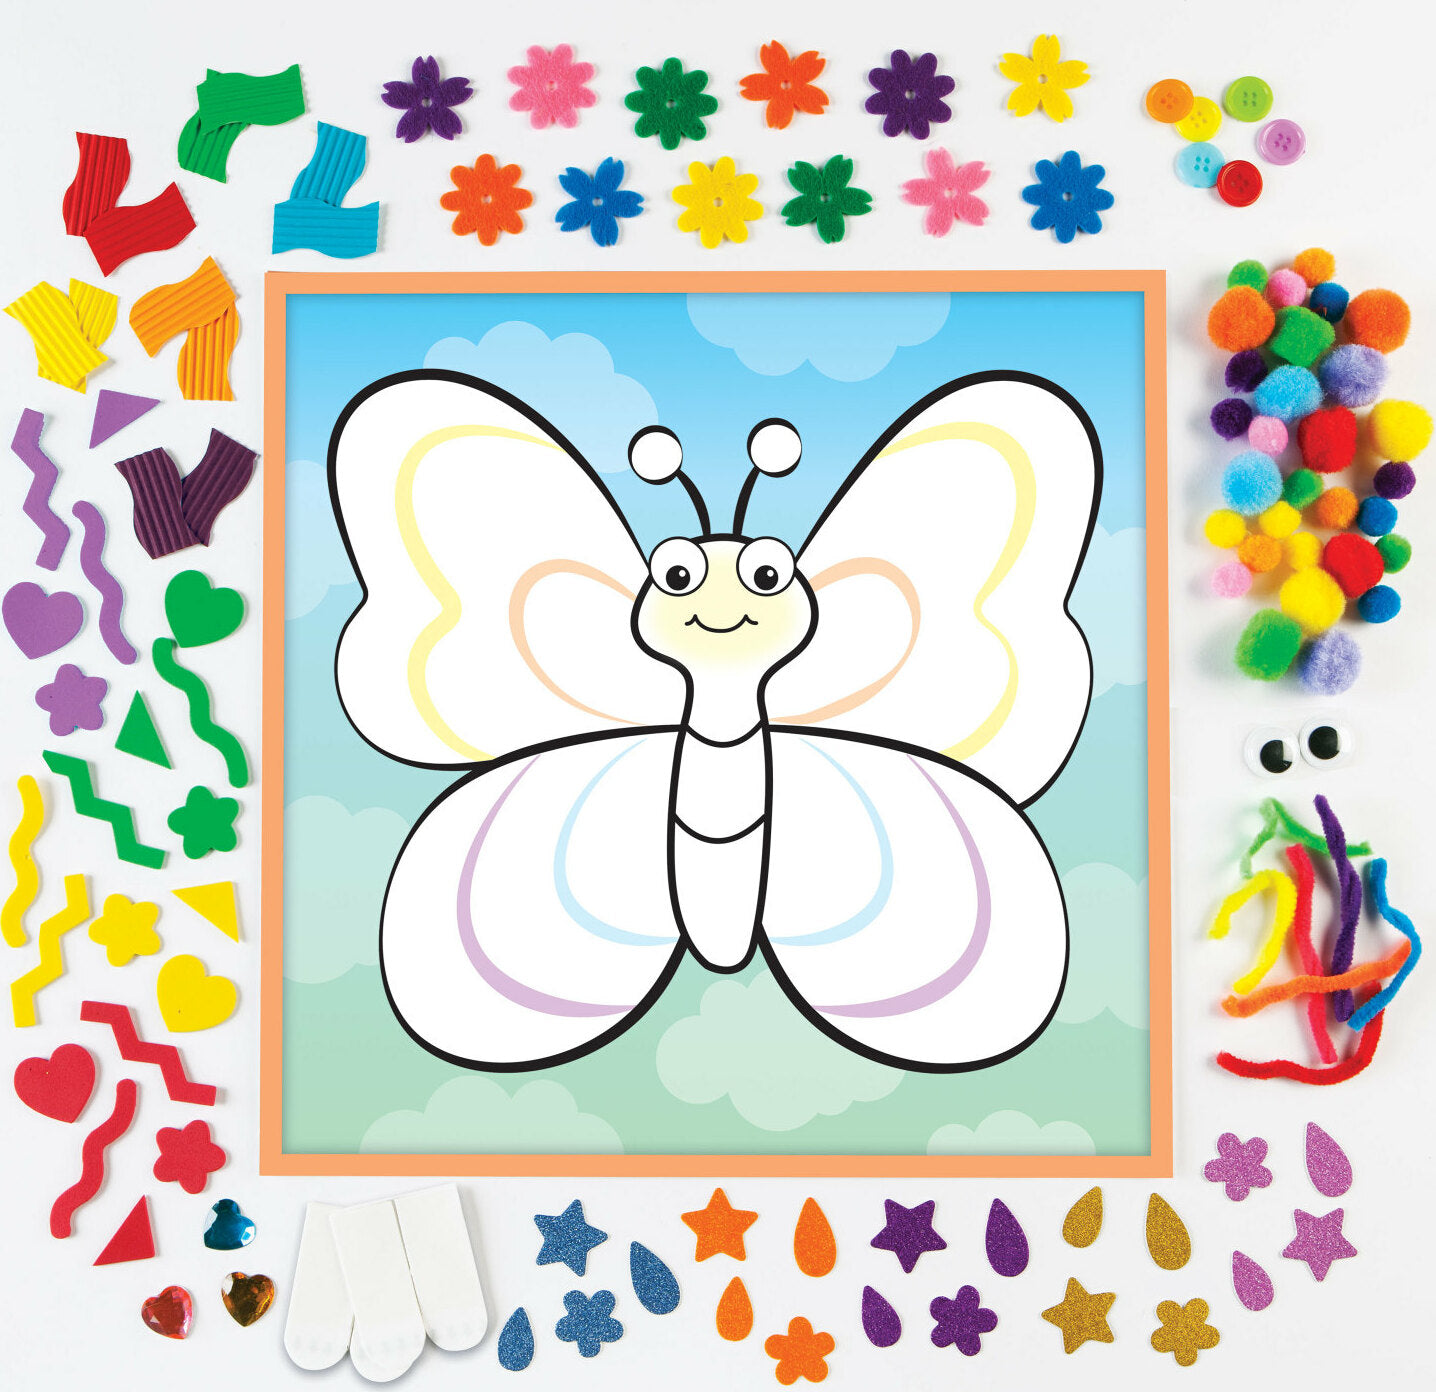 Sticky Wall Art - Butterfly